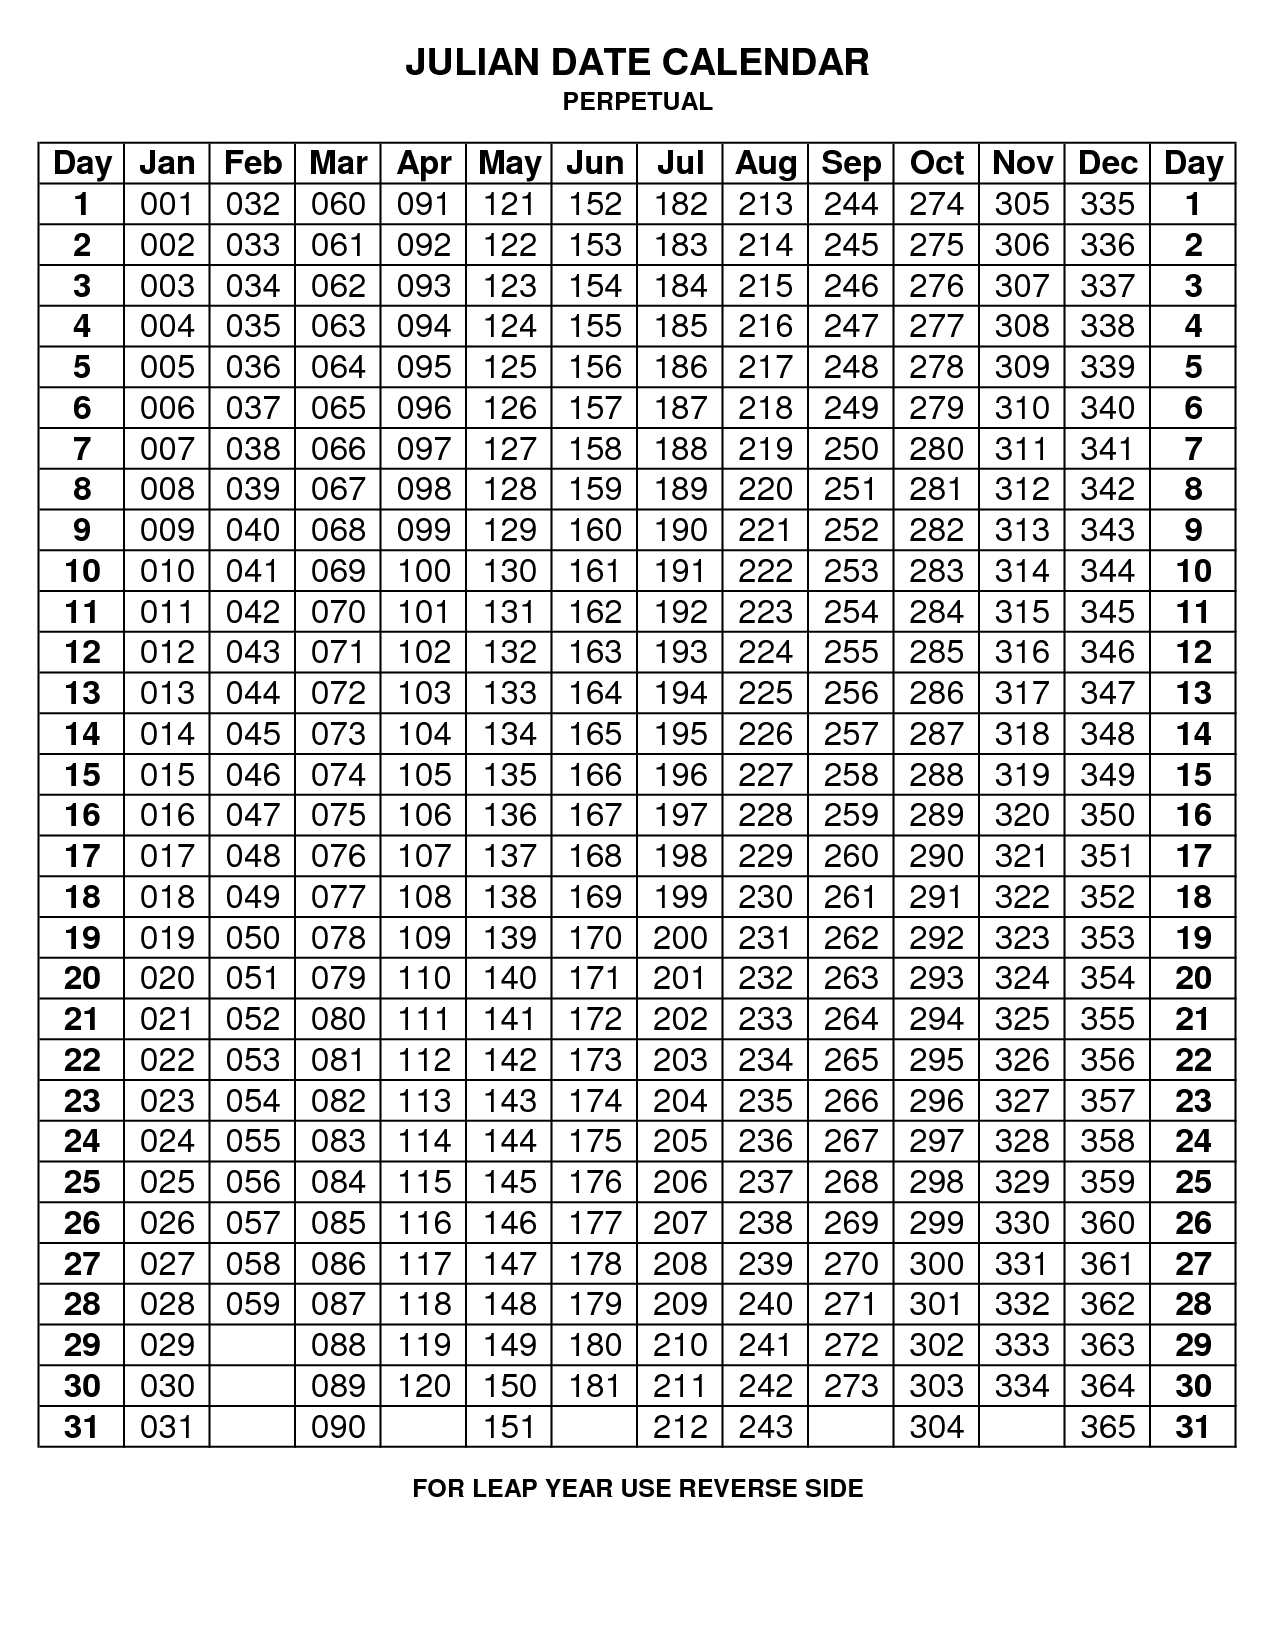 Julian Date Calendar 2021 Example Calendar Printable